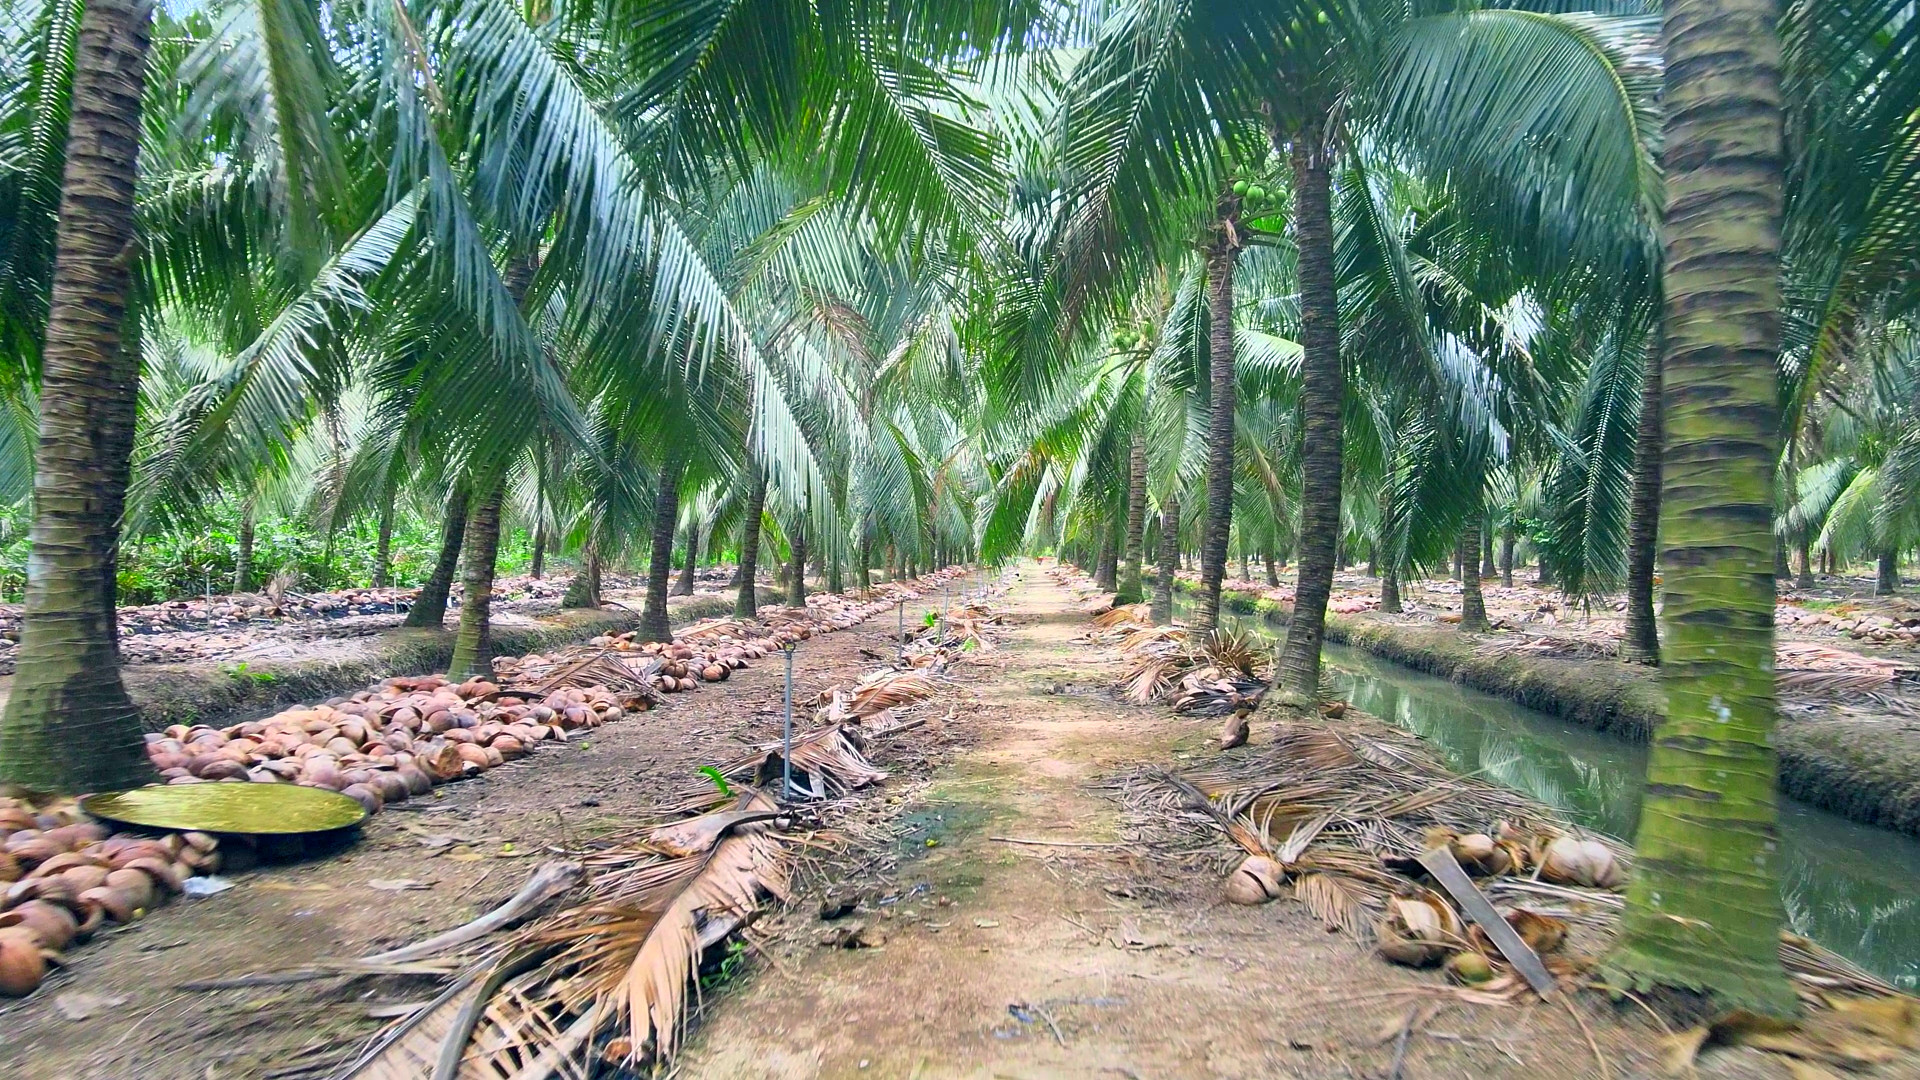 rita cooperative coconut area located in ben tre